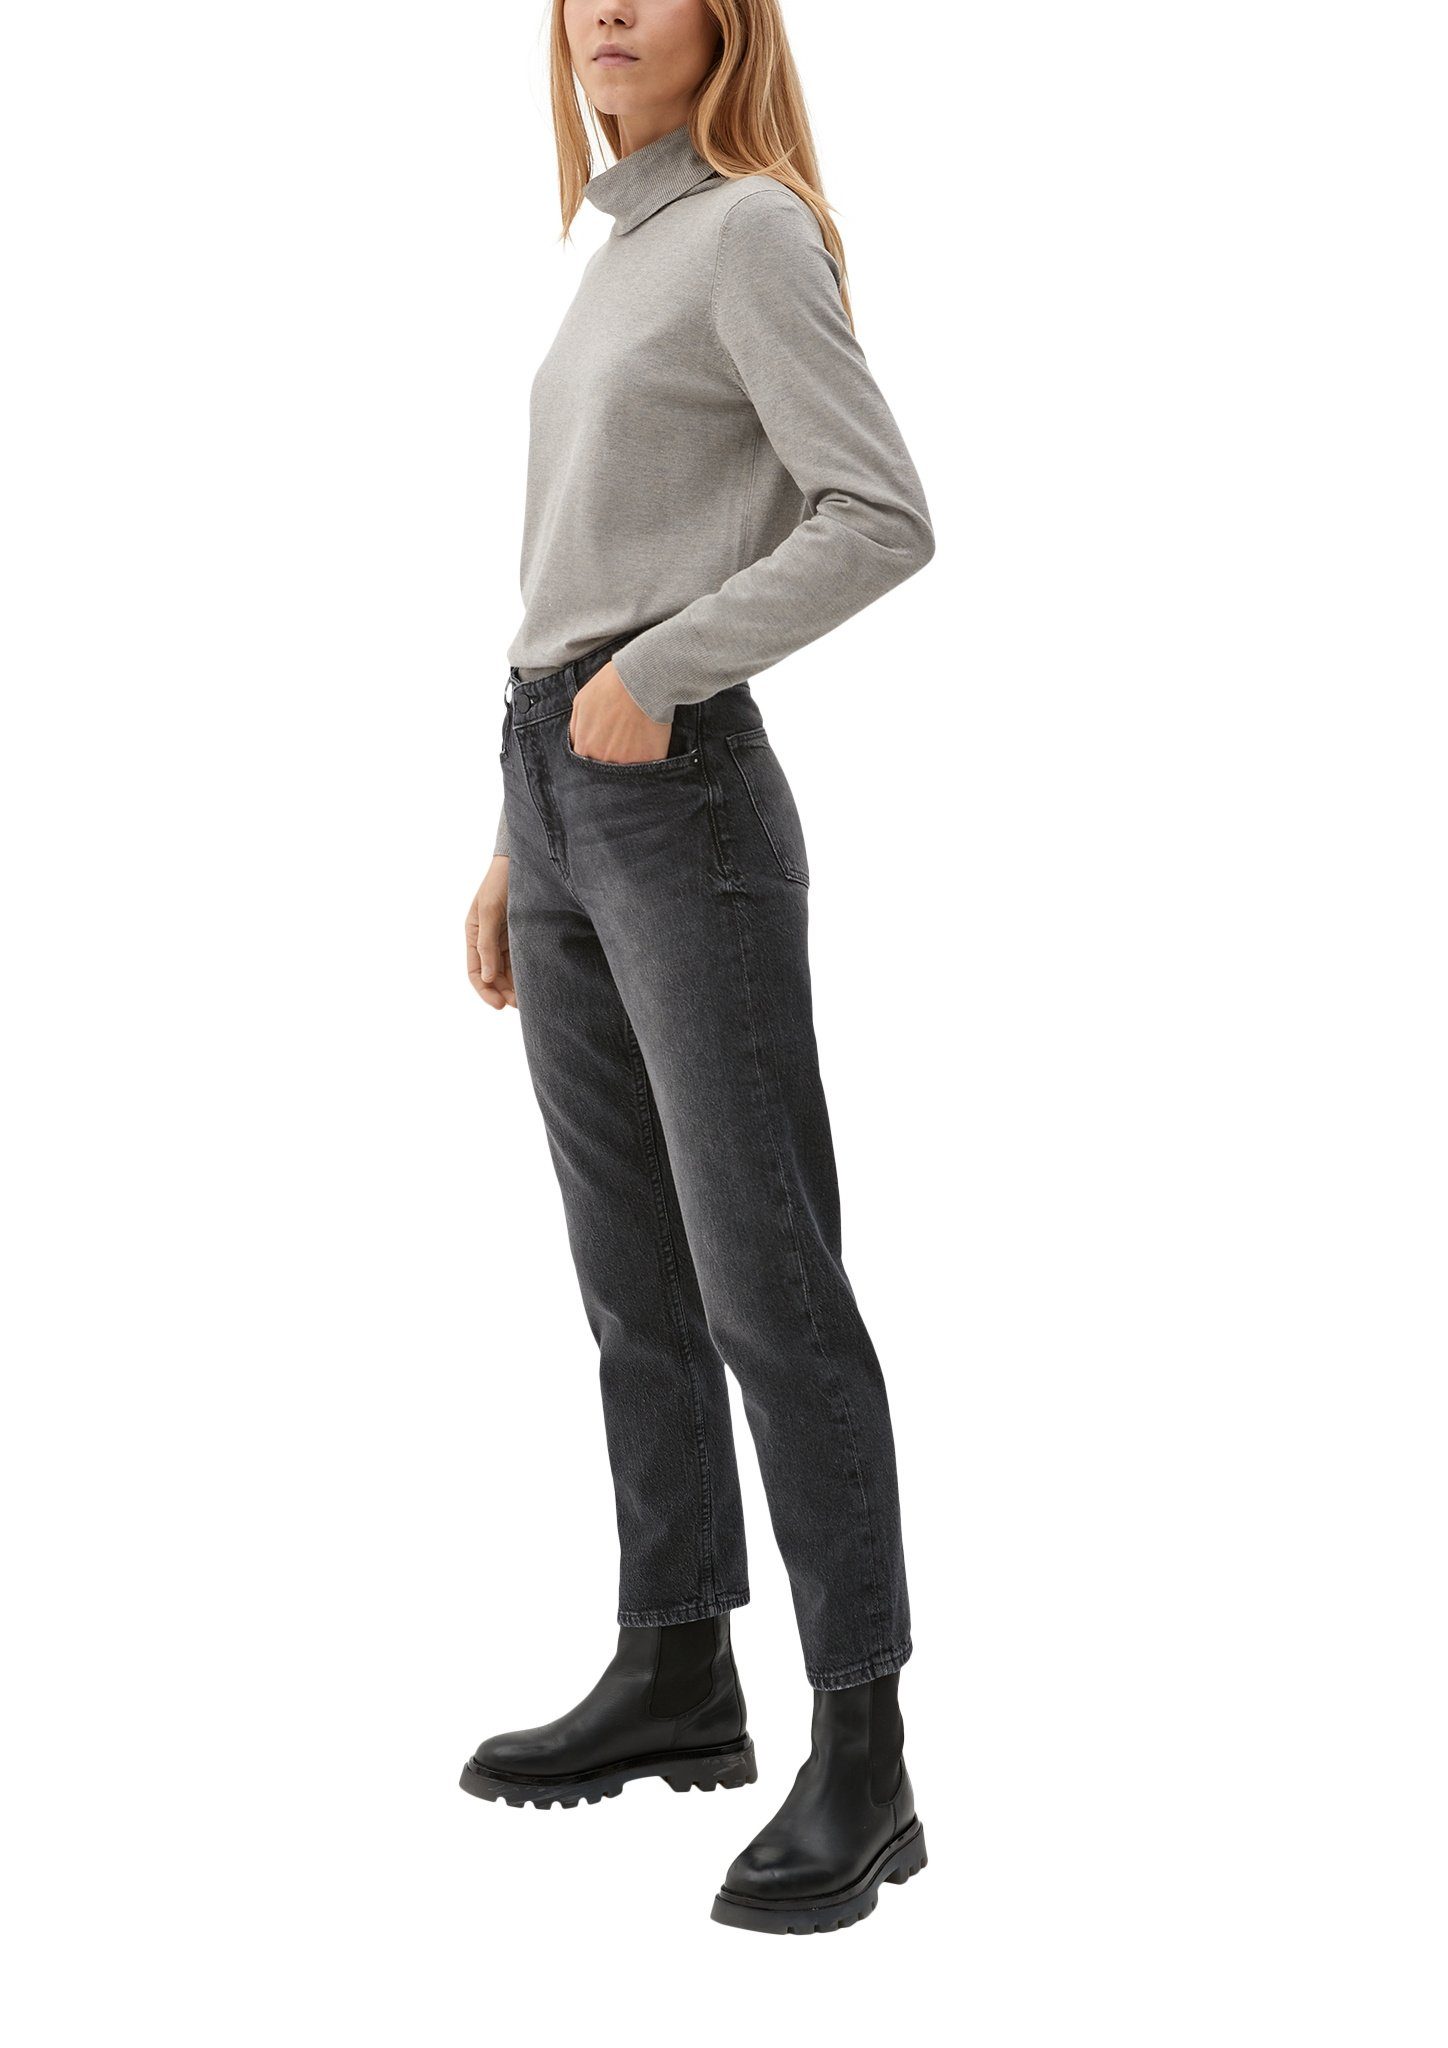 Slim grau mit s.Oliver Leg 7/8-Jeans 7/8-Jeans